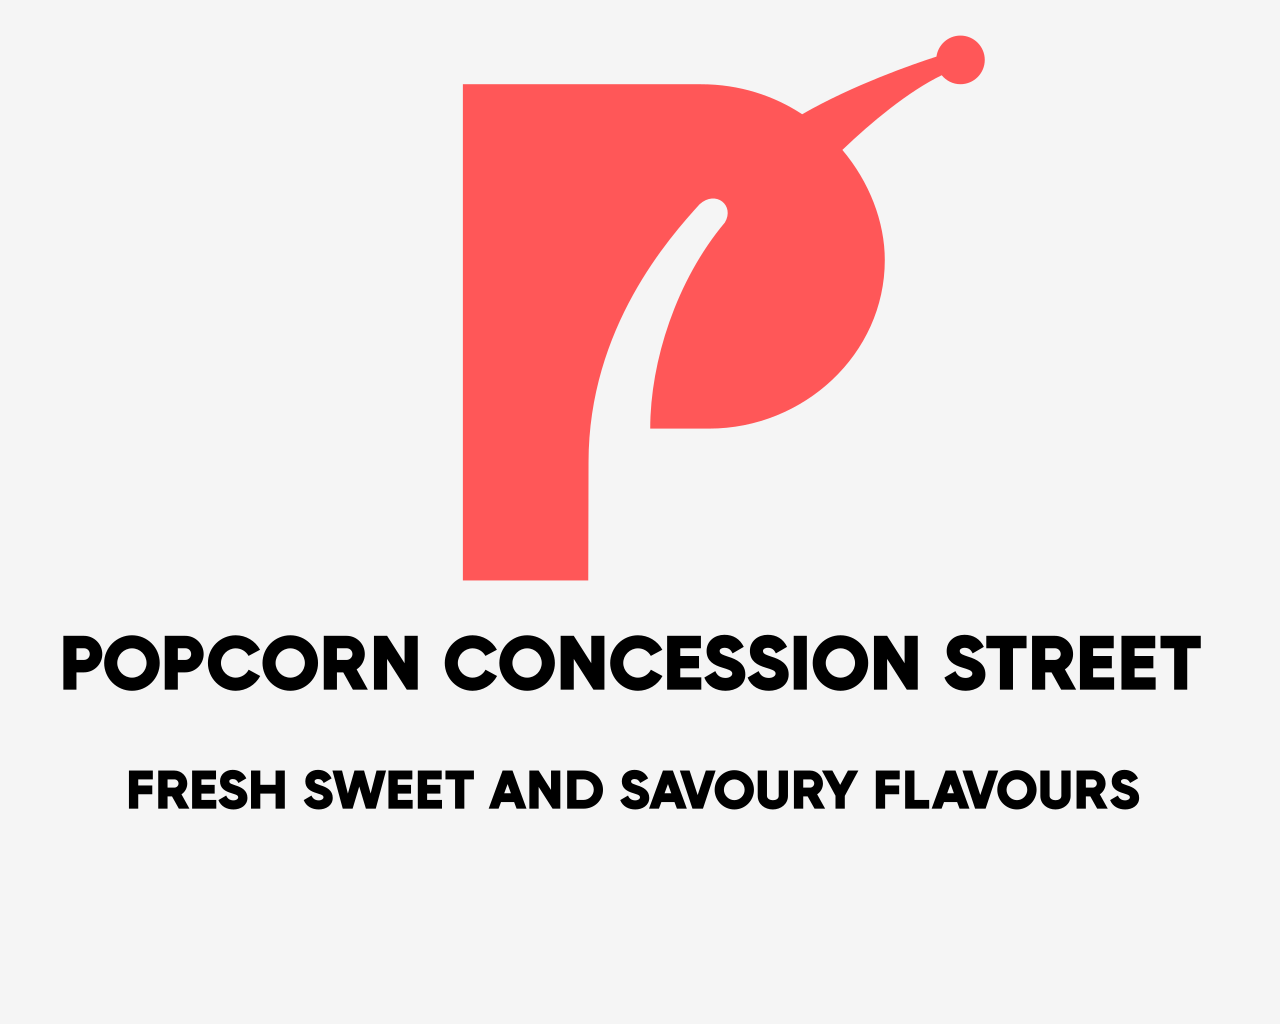 Popcorn Concession Street